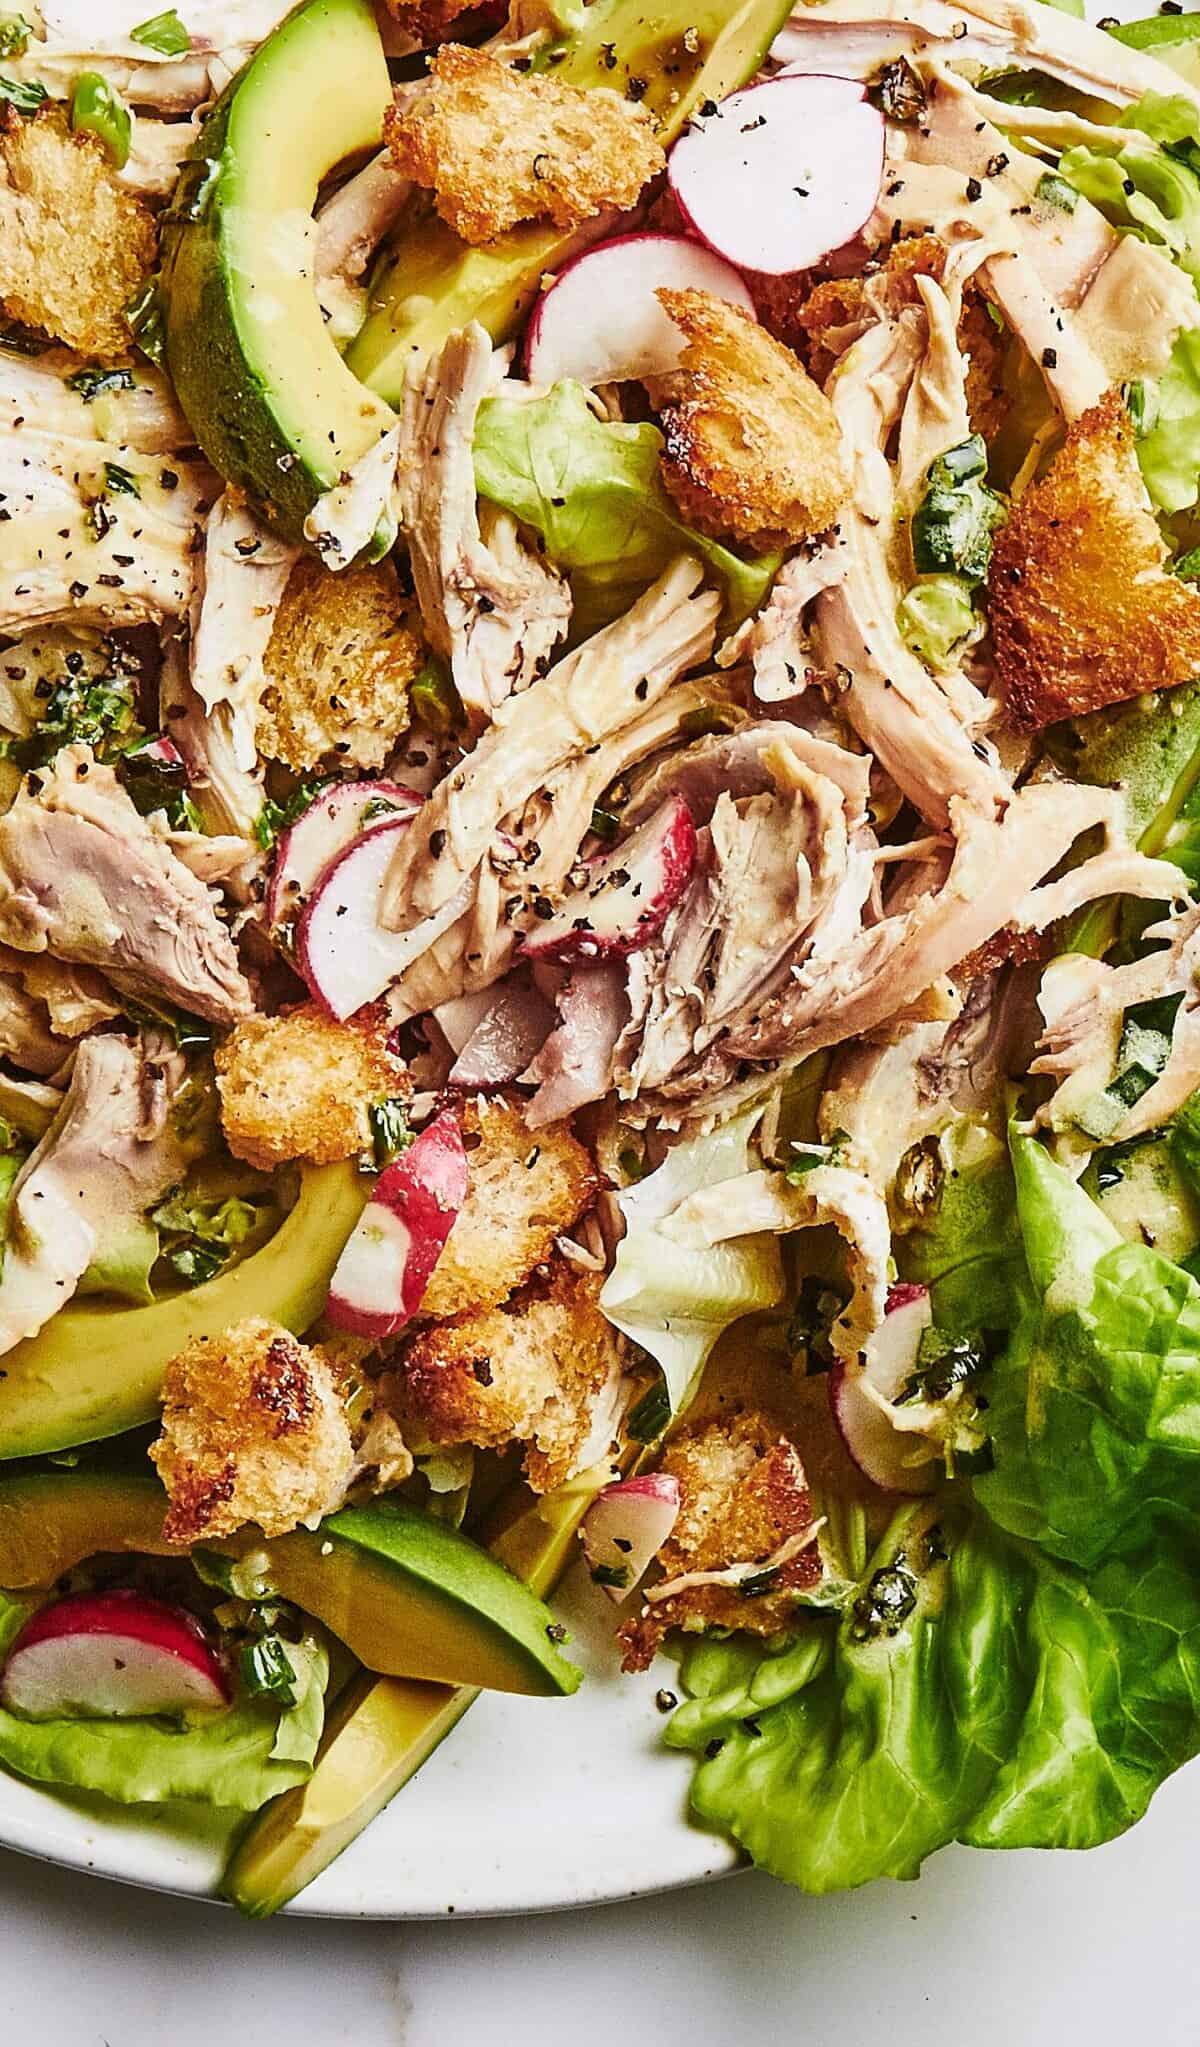  Crisp greens, juicy chicken: our Rotisserie Chicken Salad has it all!